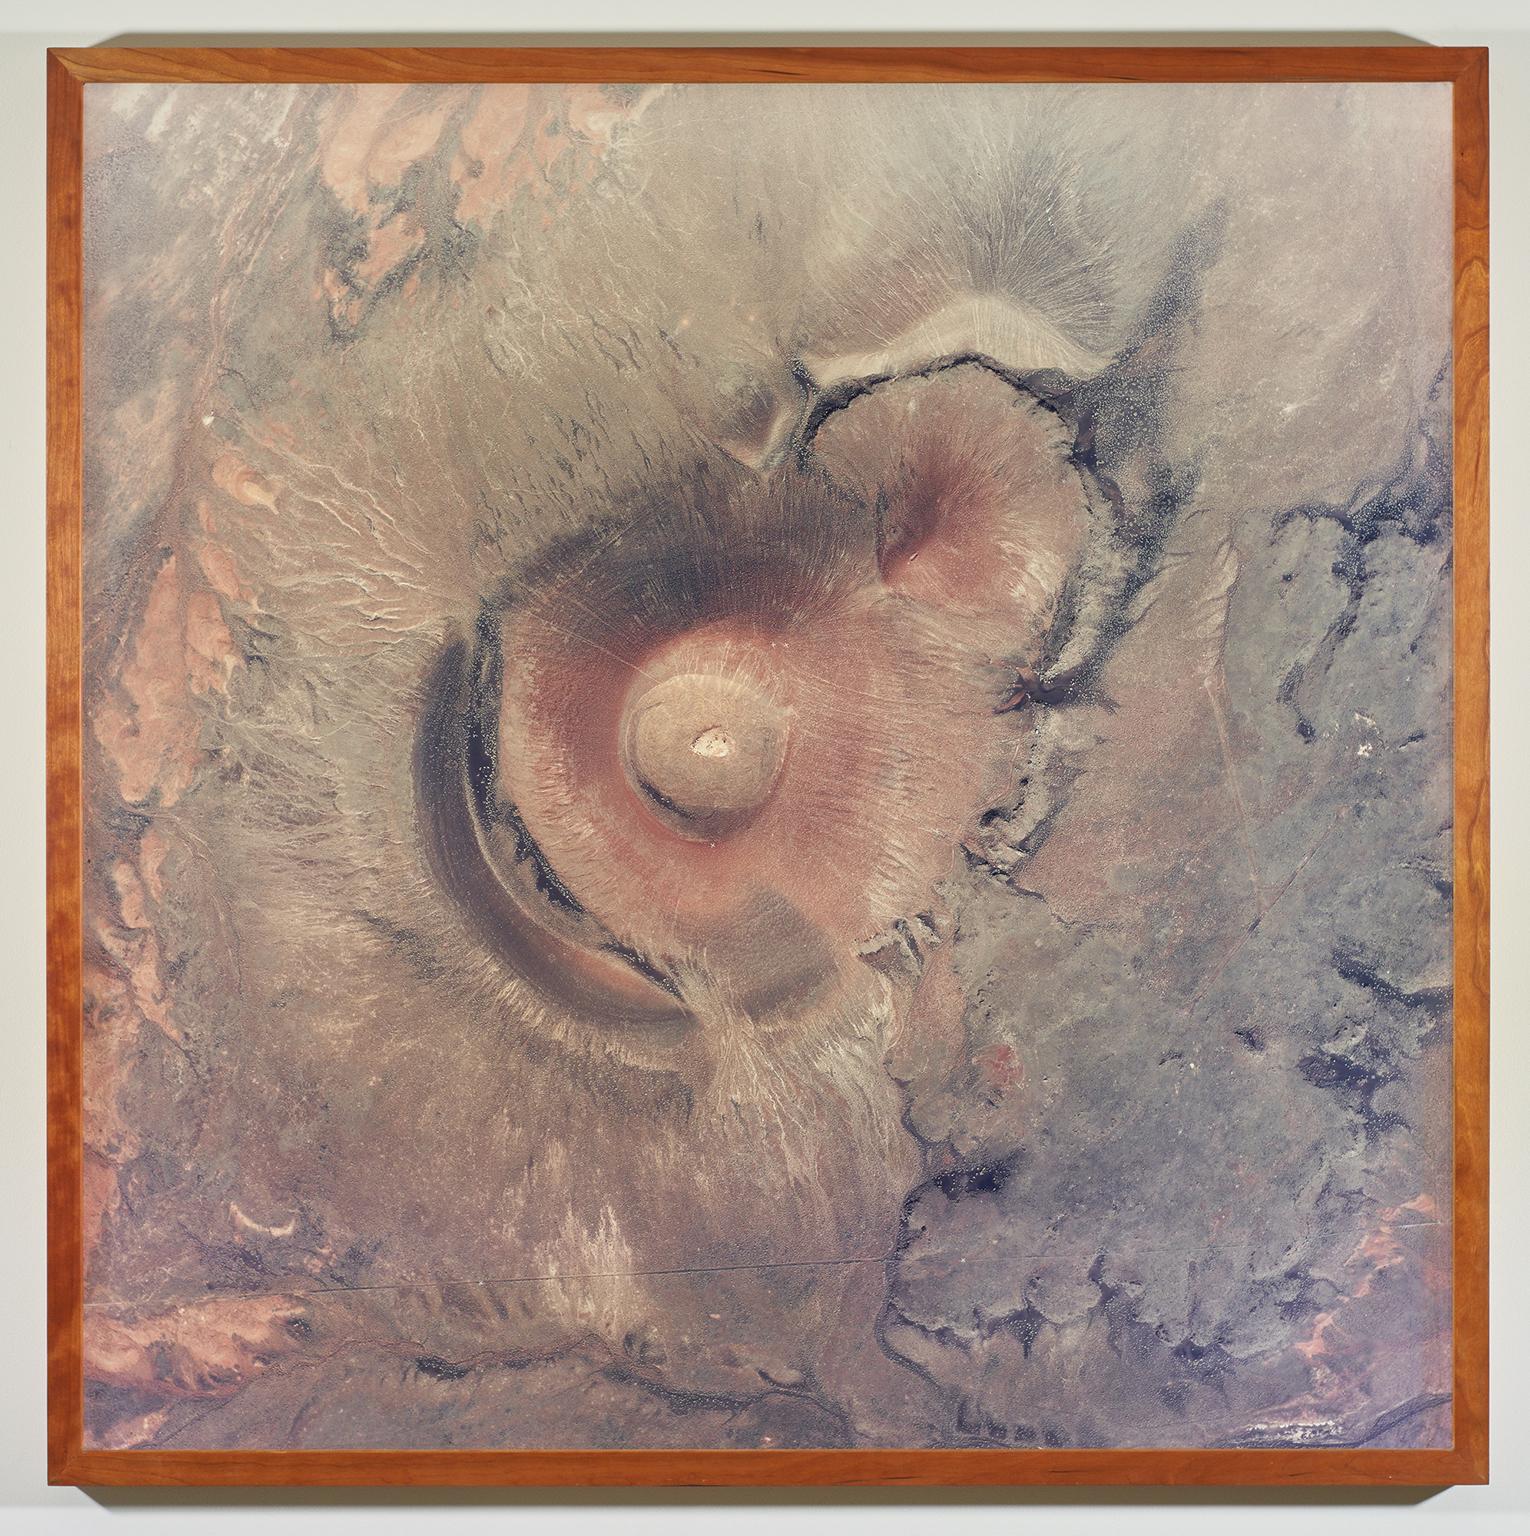 James Turrell Landscape Photograph - "1st Aerial Survey with 10 Camera" color aerial unique photograph Roden Crater